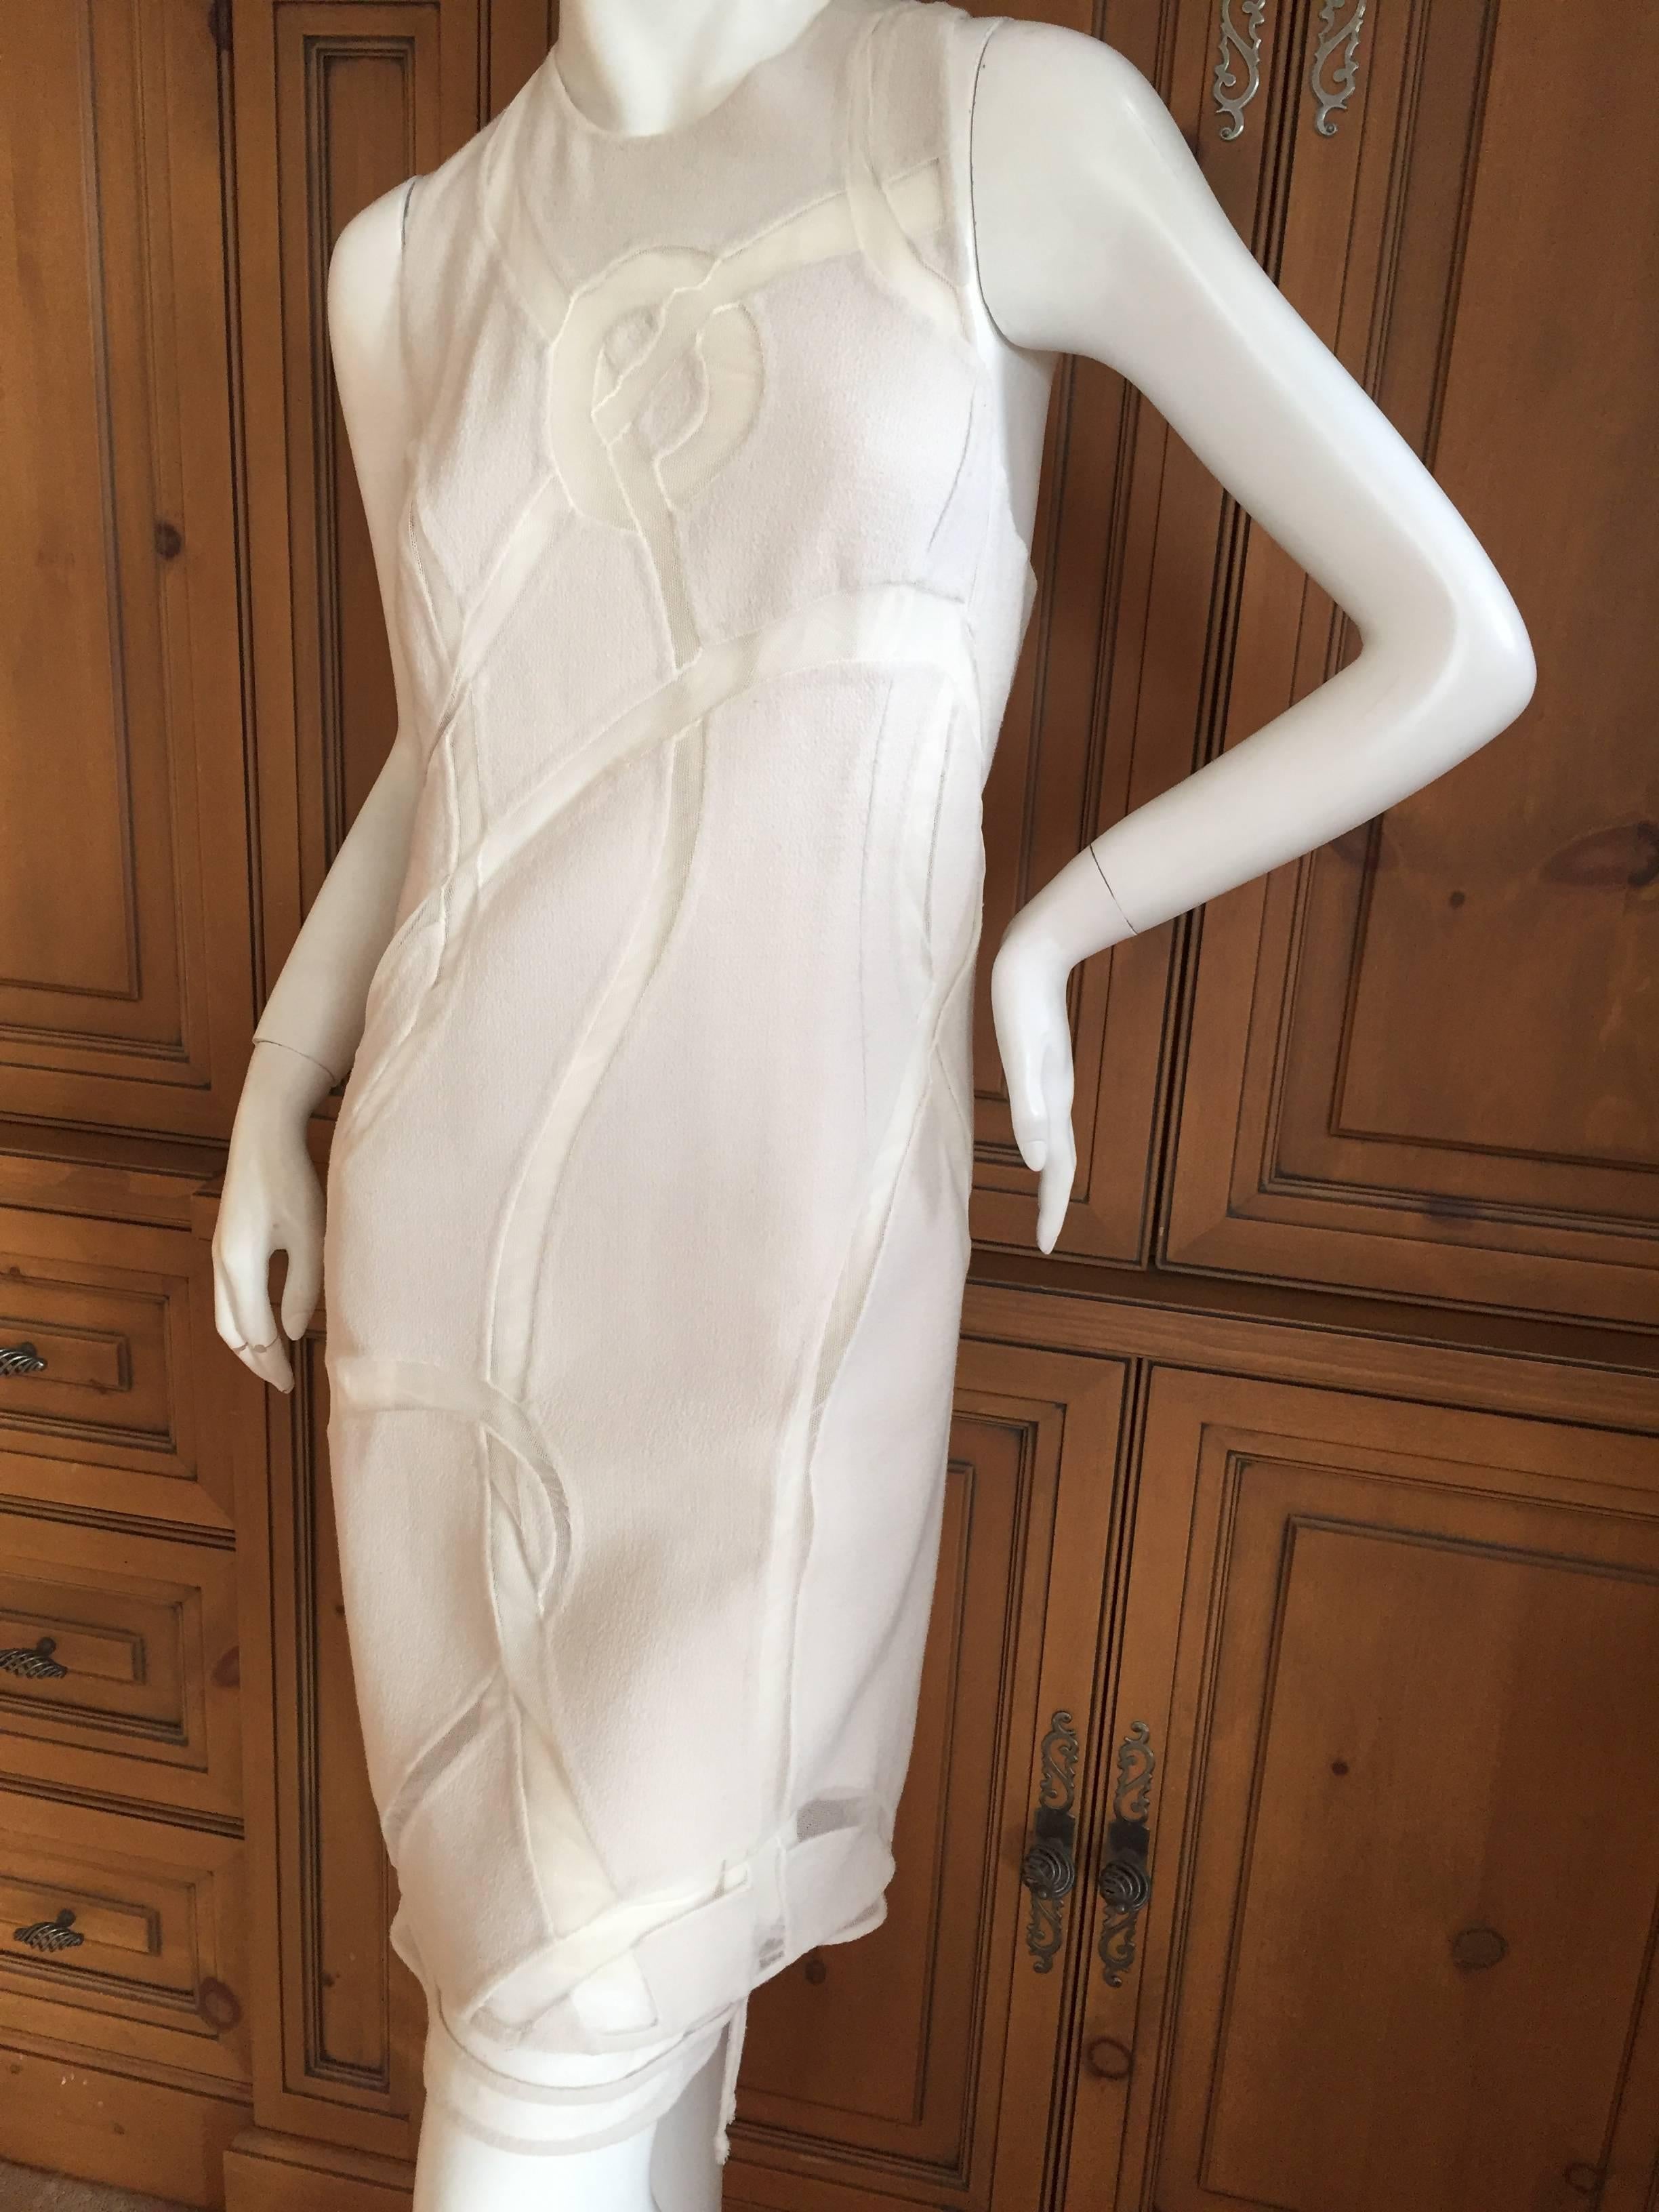 Ralph Rucci Ivory Sleeveless Dress with Mesh Inserts Size 4 2